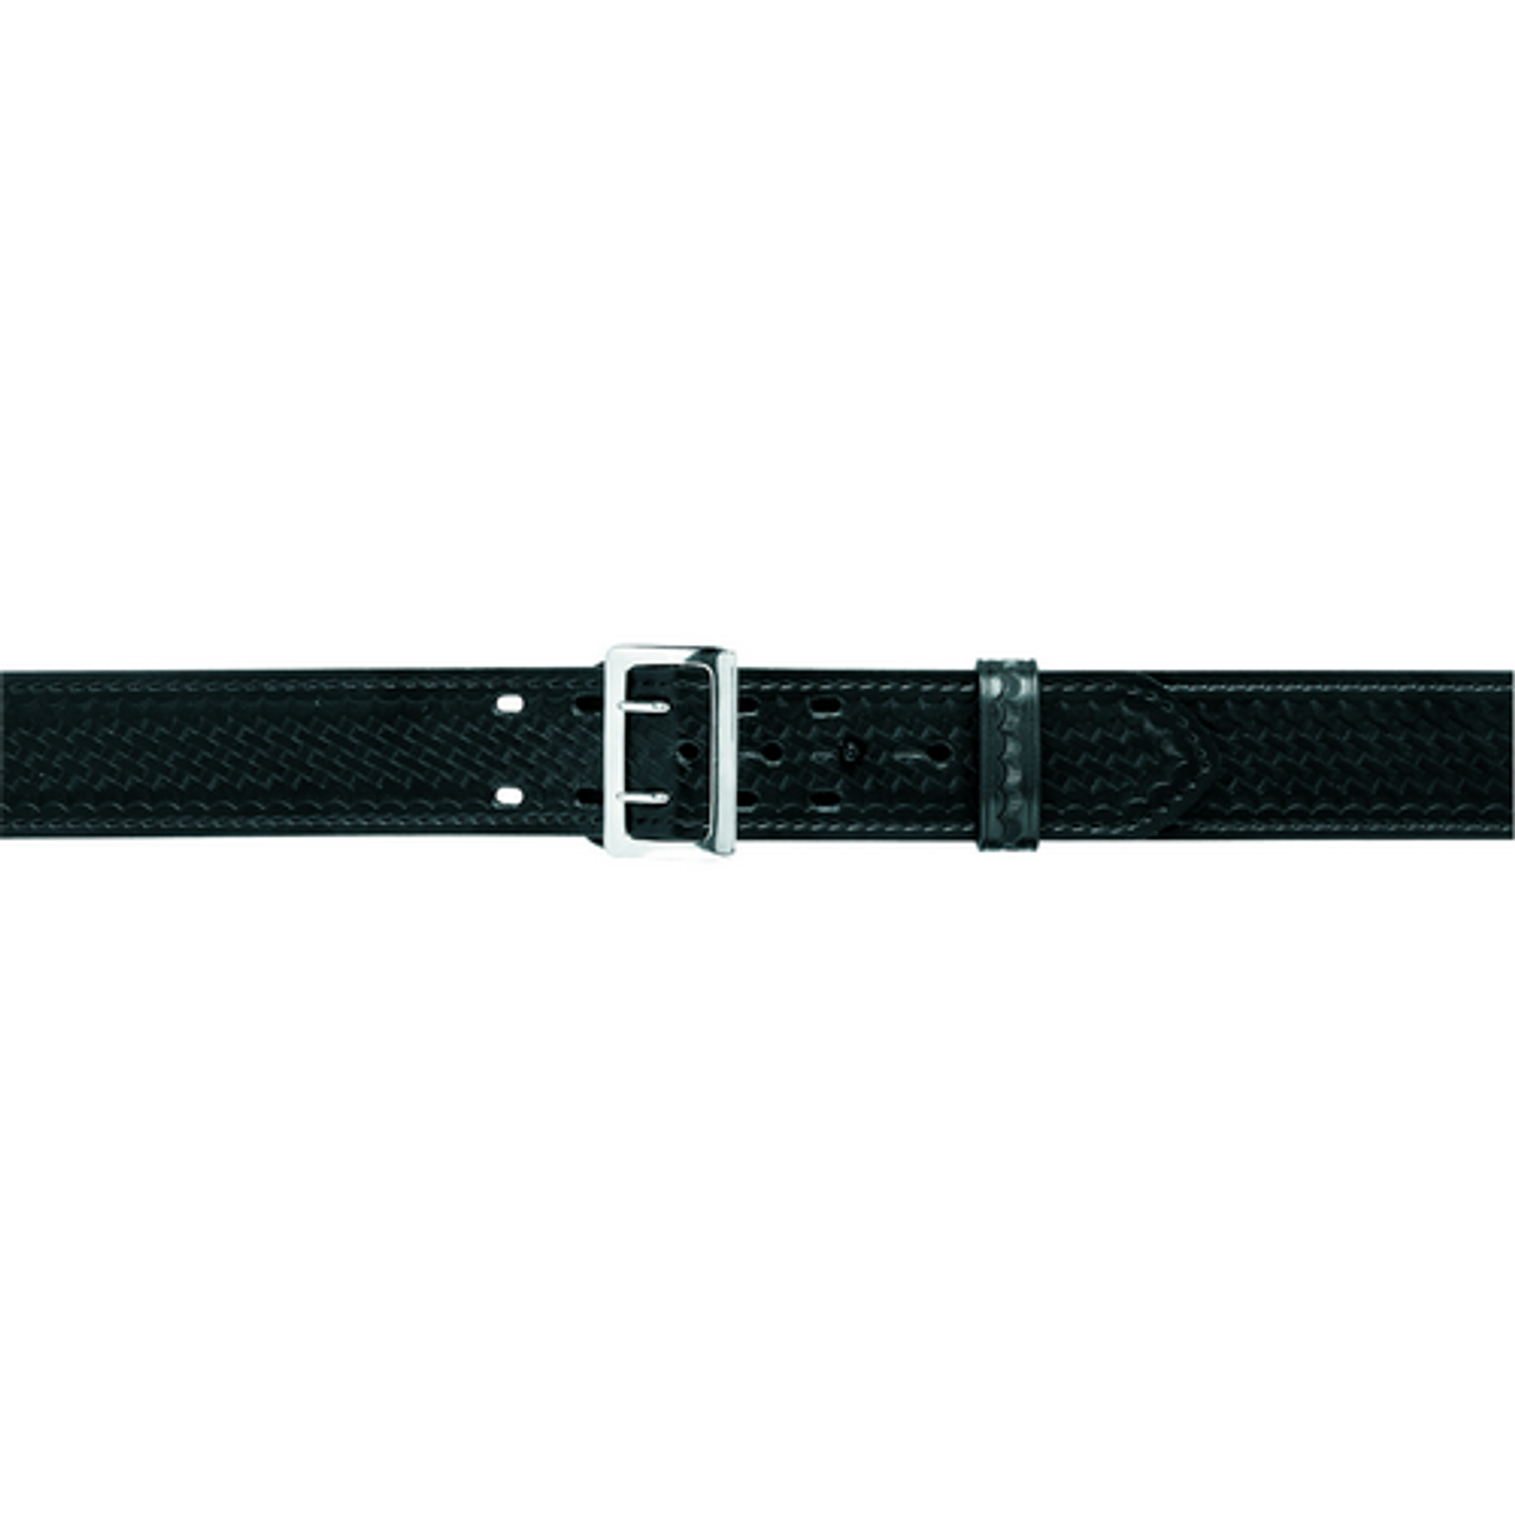 87 - Sam Browne Buckled Duty Belt, 2.25 (58mm) - KR87-42-9B